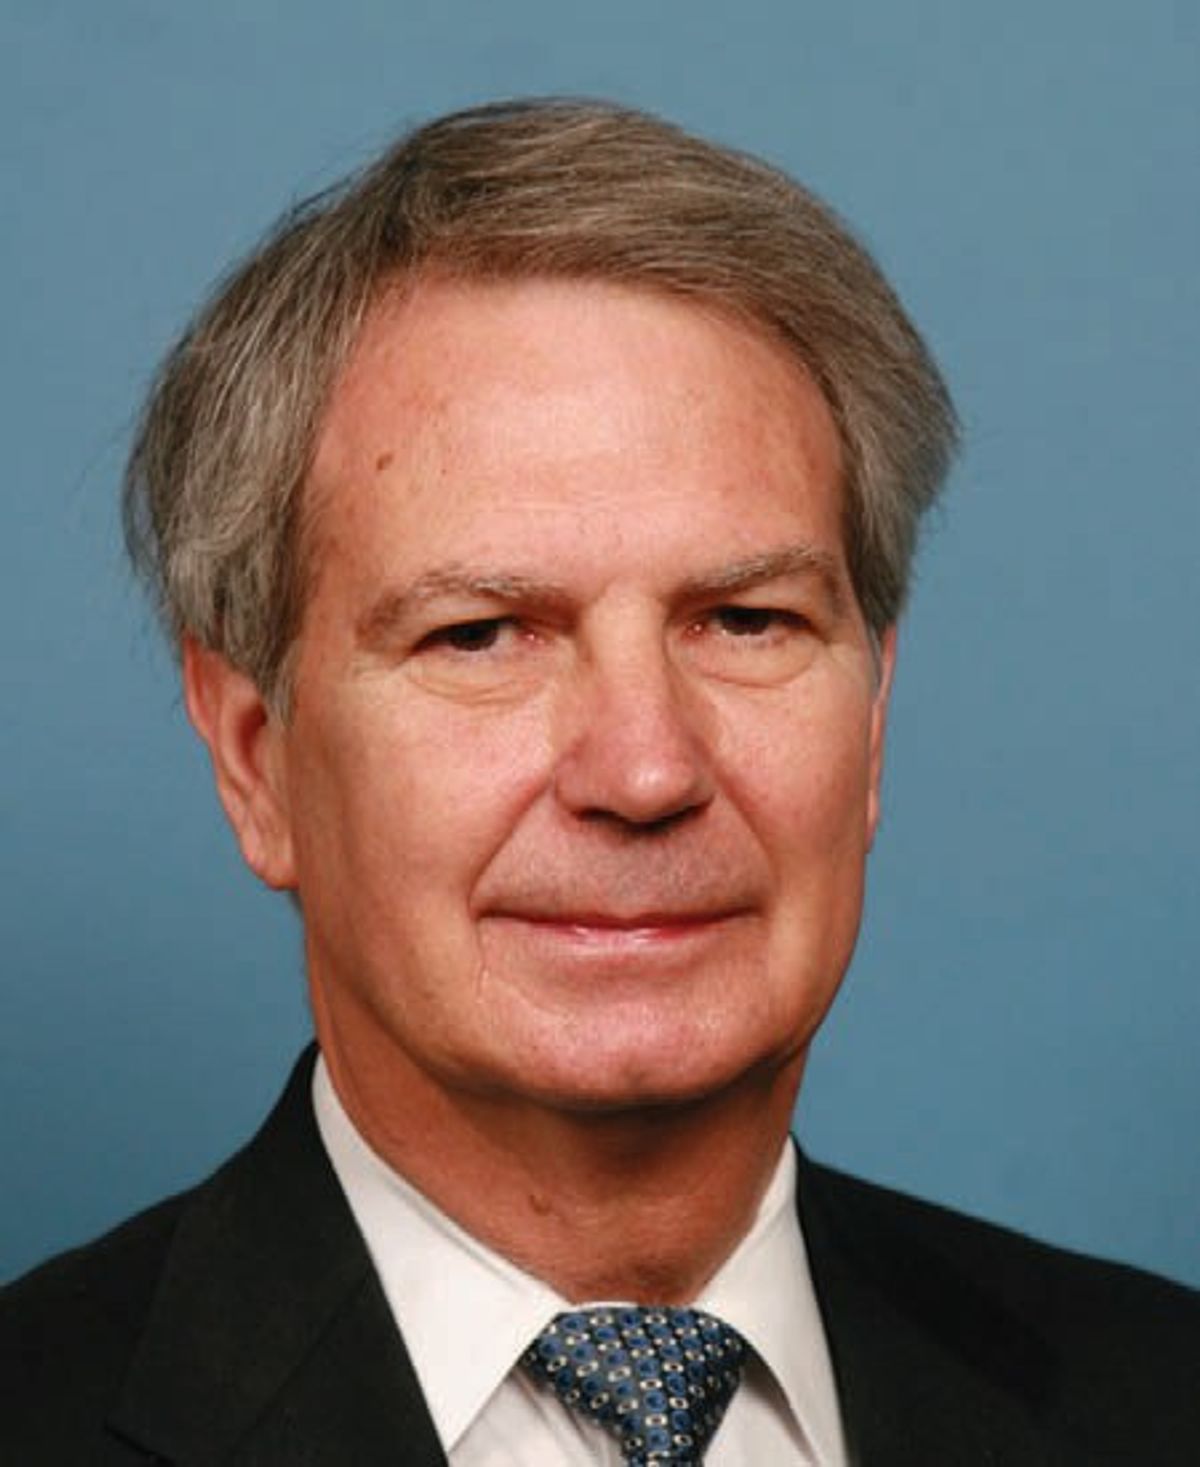 GOP Congressman Walter Jones Talks Millennial Issues, Slams Bush Administration On Iraq